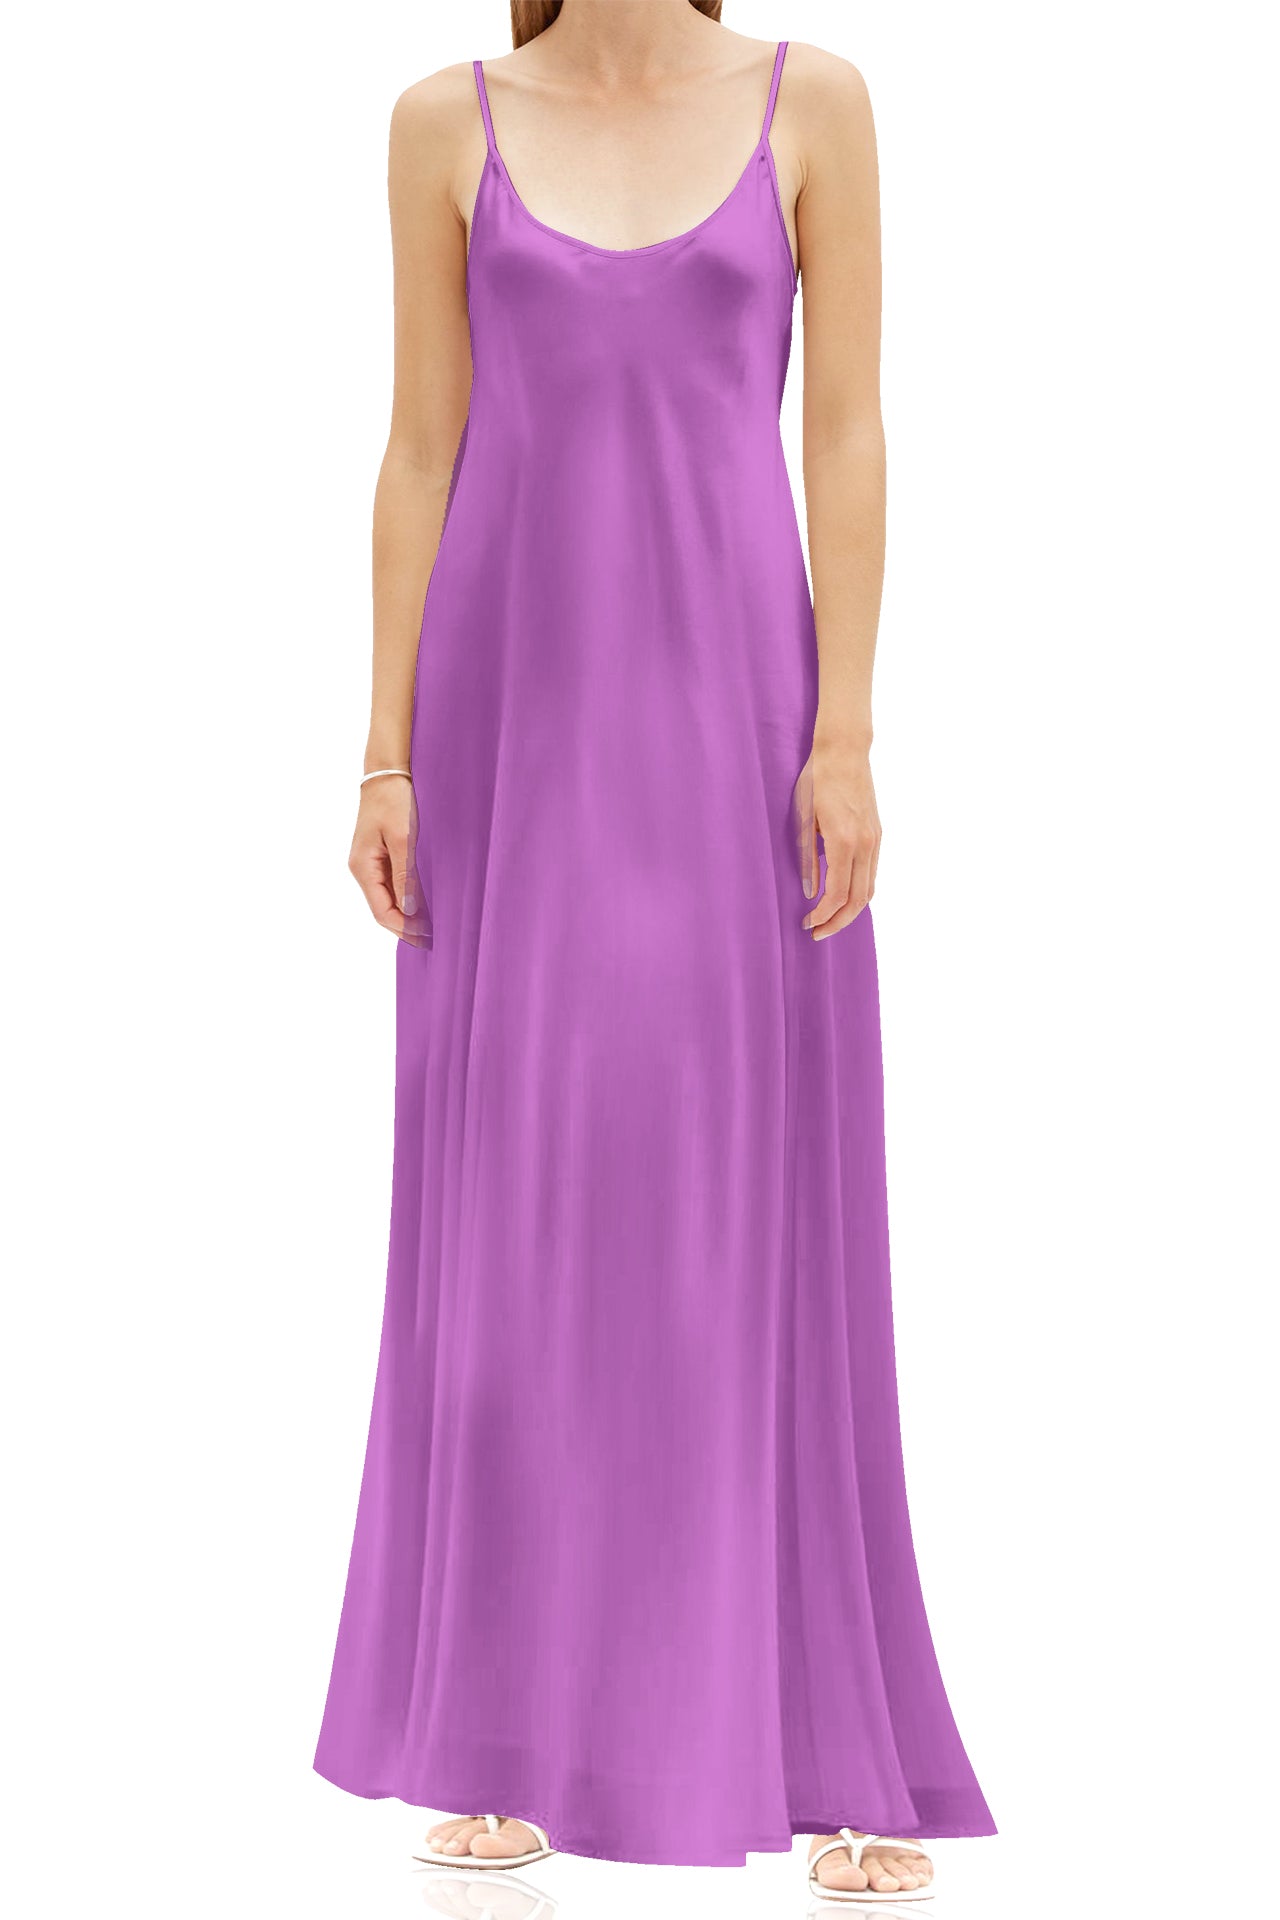 "slip dress purple" "long camisole dress" "Kyle X Shahida" "long silk slip dress"